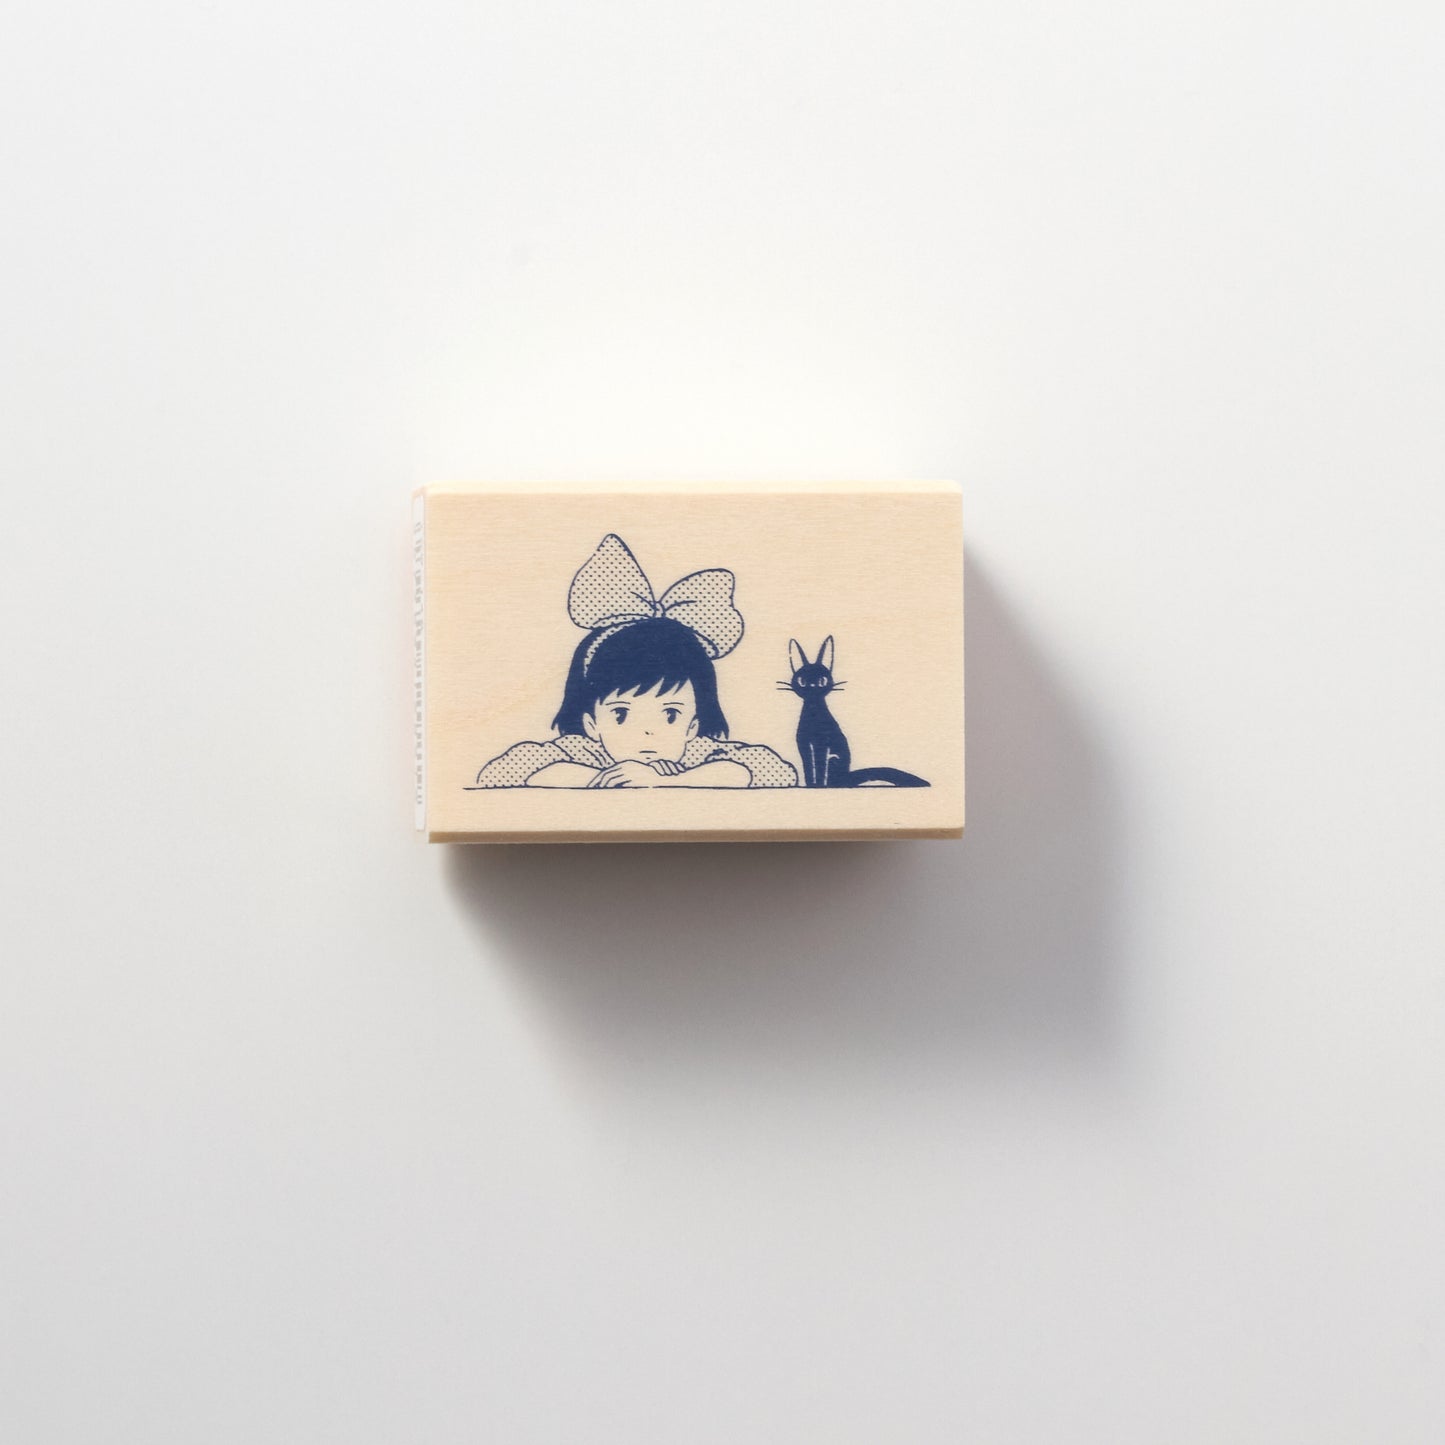 Kiki and Jiji Rubber Stamps Kiki's Delivery Service Studio Ghibli / BEVERLY